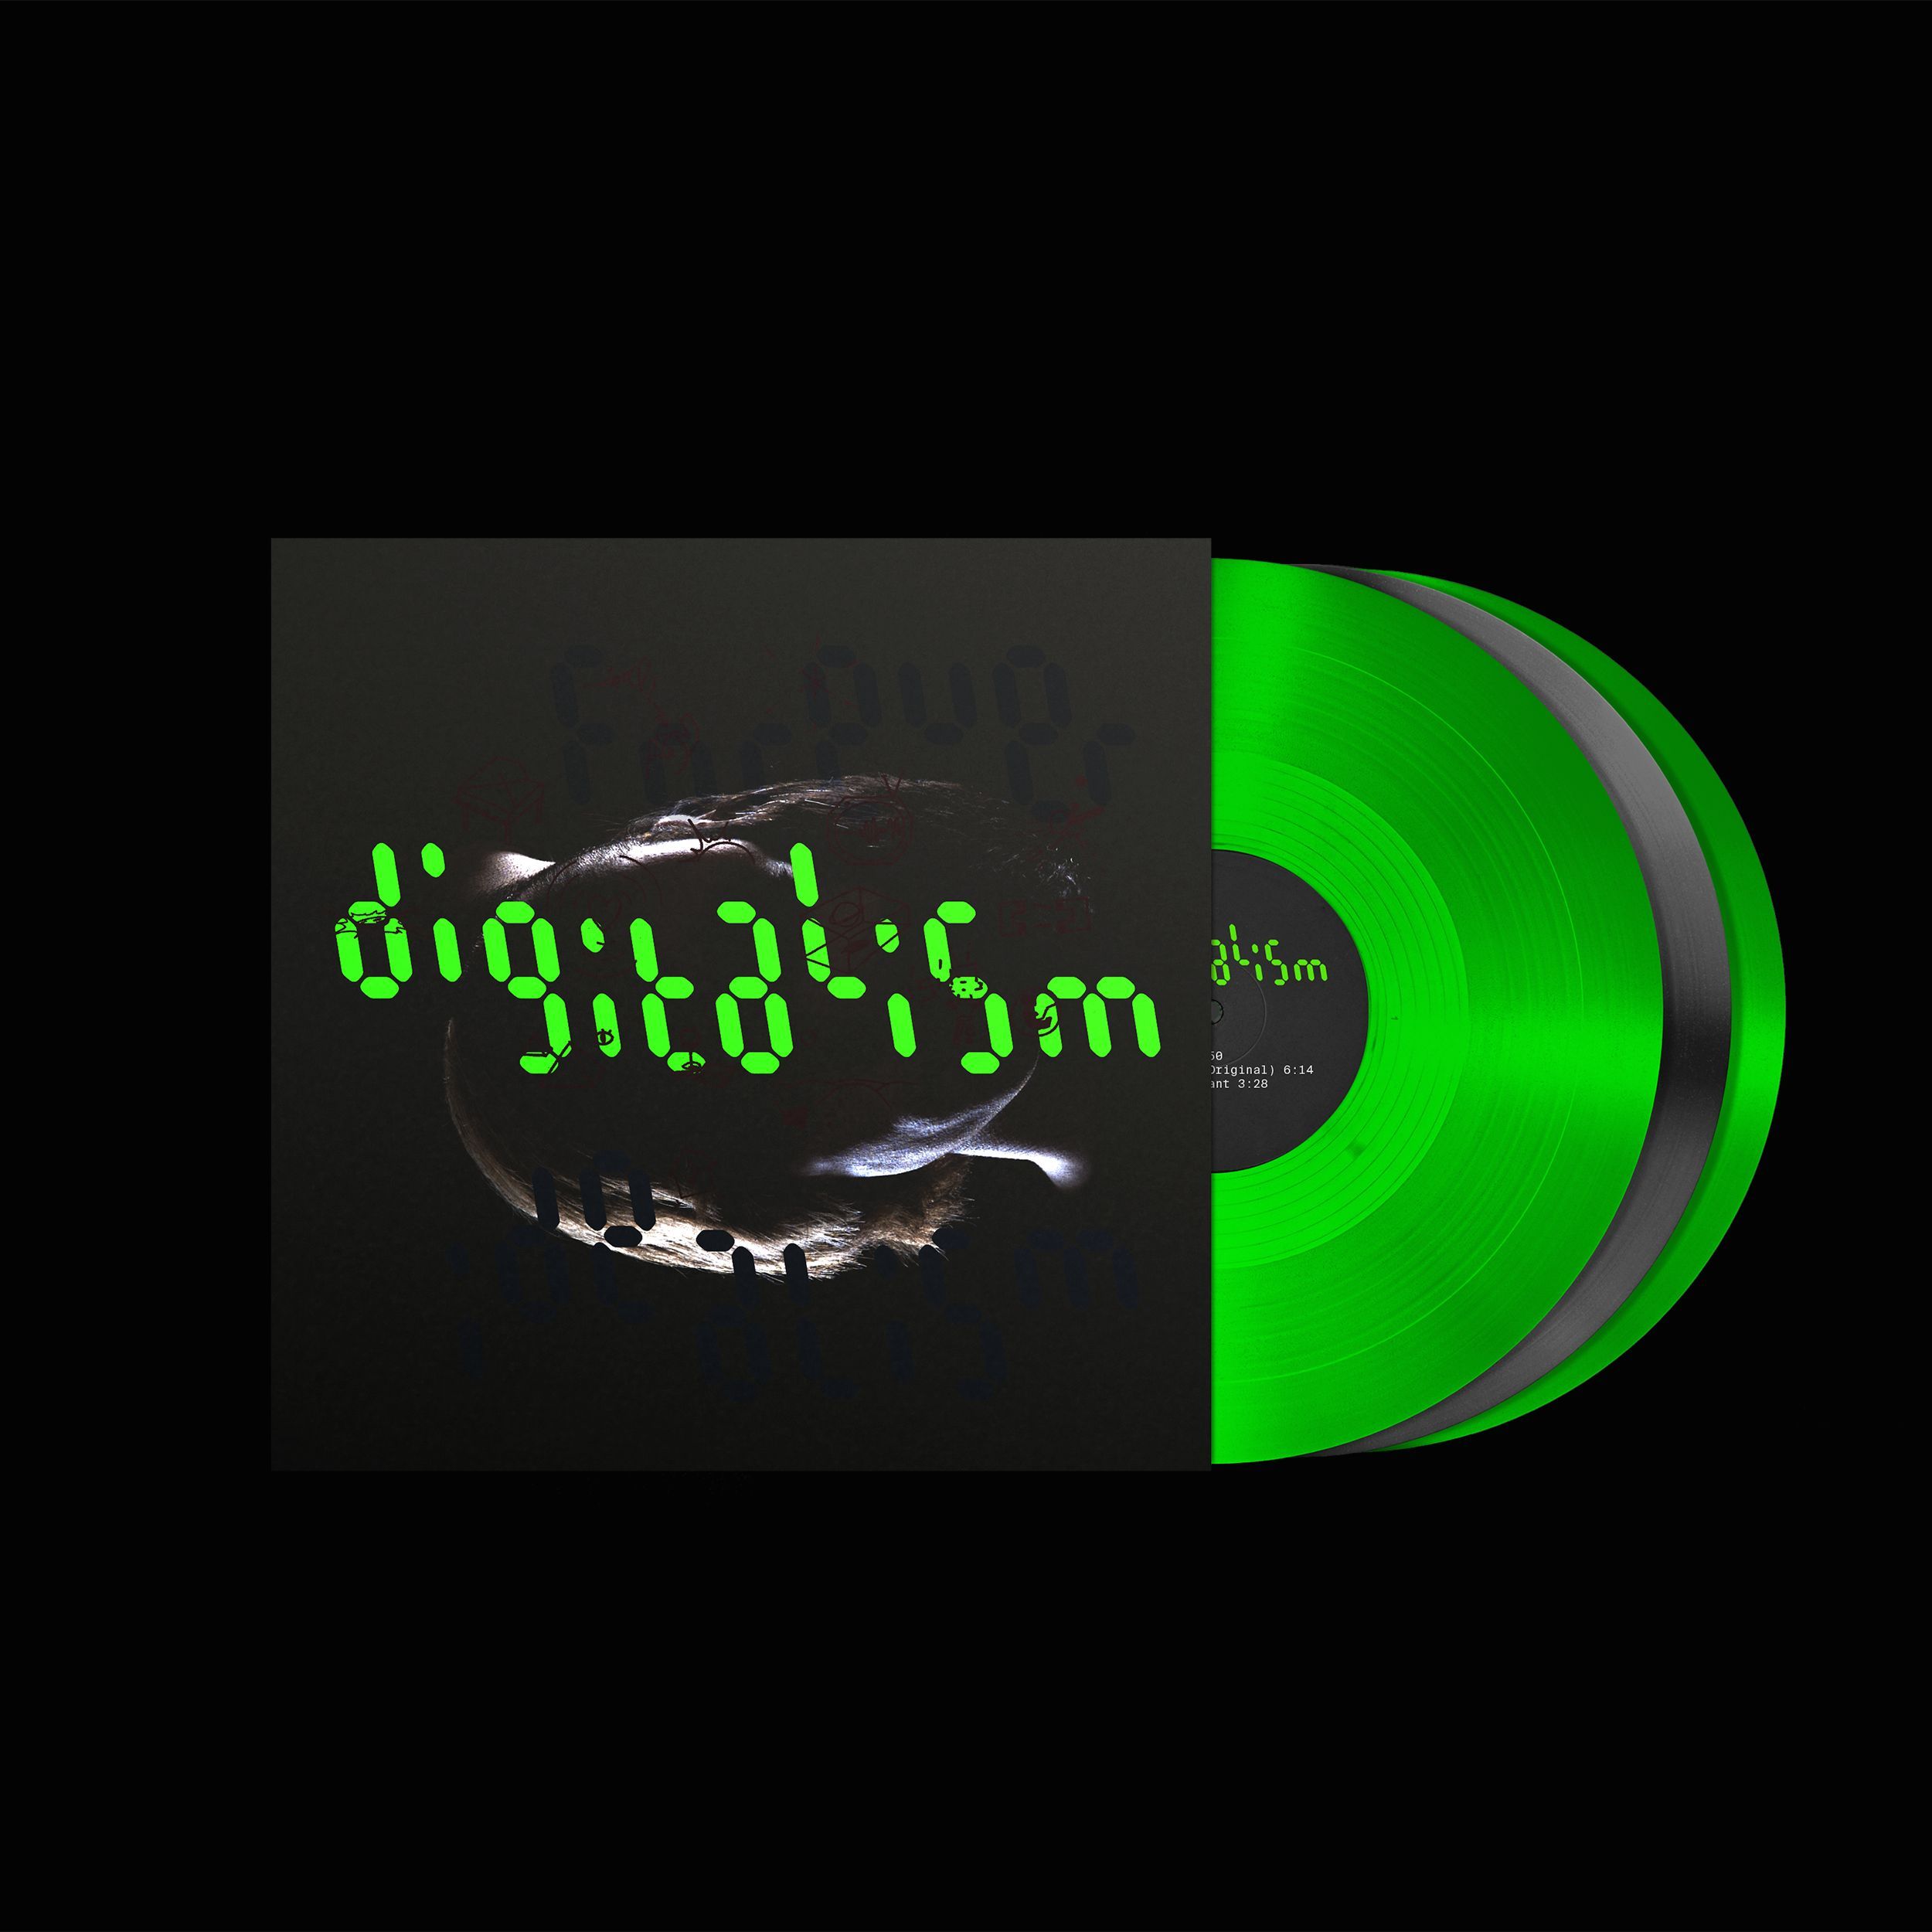 Digitalism - Idealism Forever (Remastered + Bonus Tracks) (3LP)